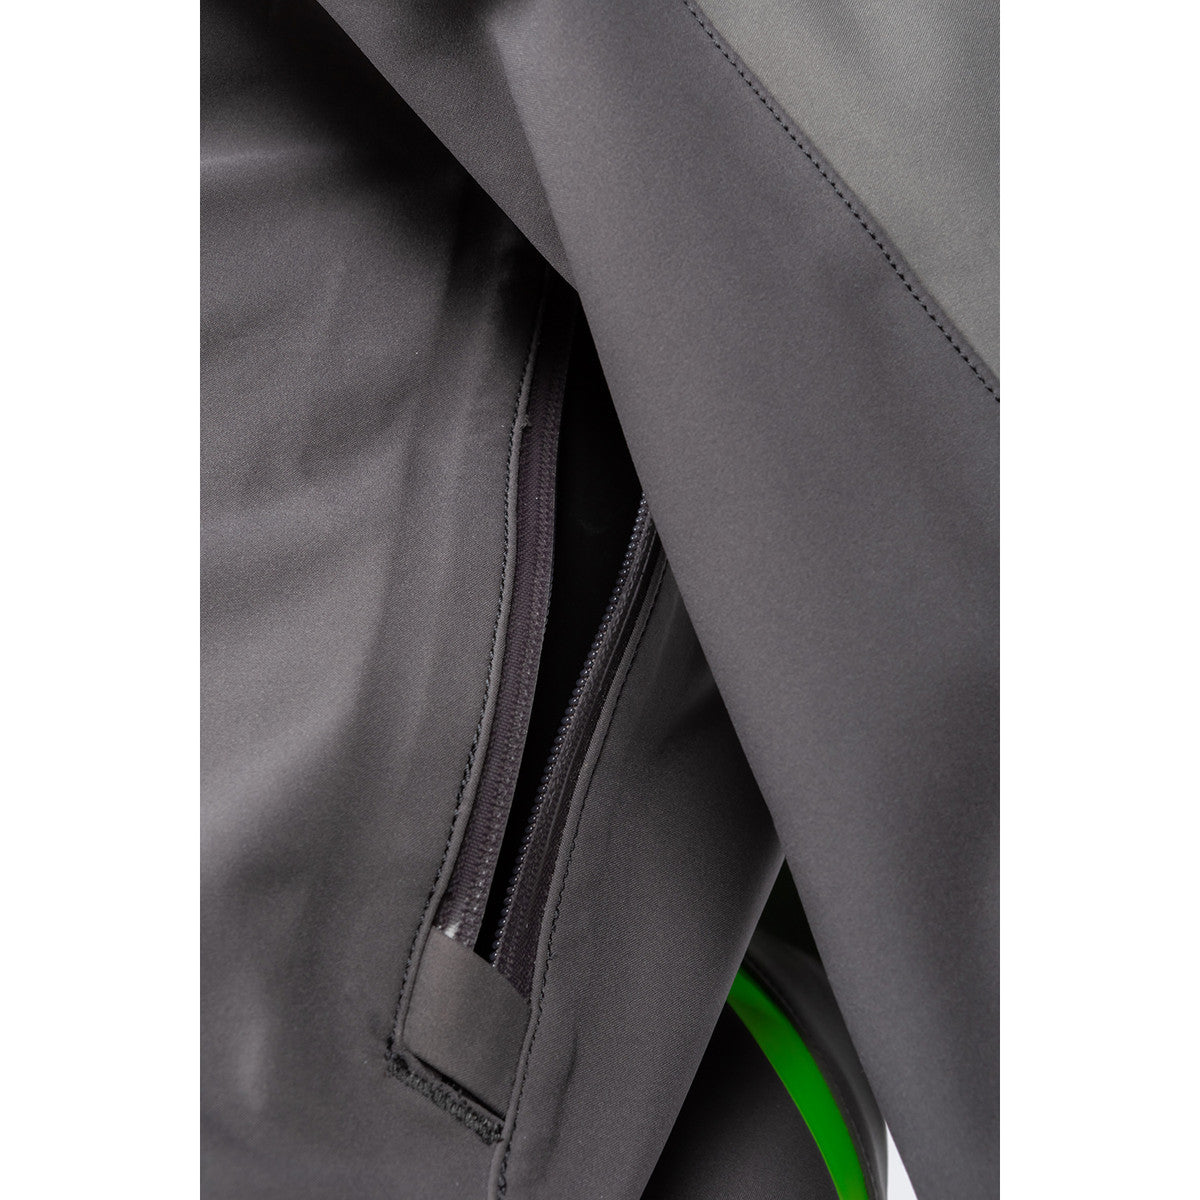 Klim Enduro S4 Castlerock Gray - Electrik Gecko Jacket